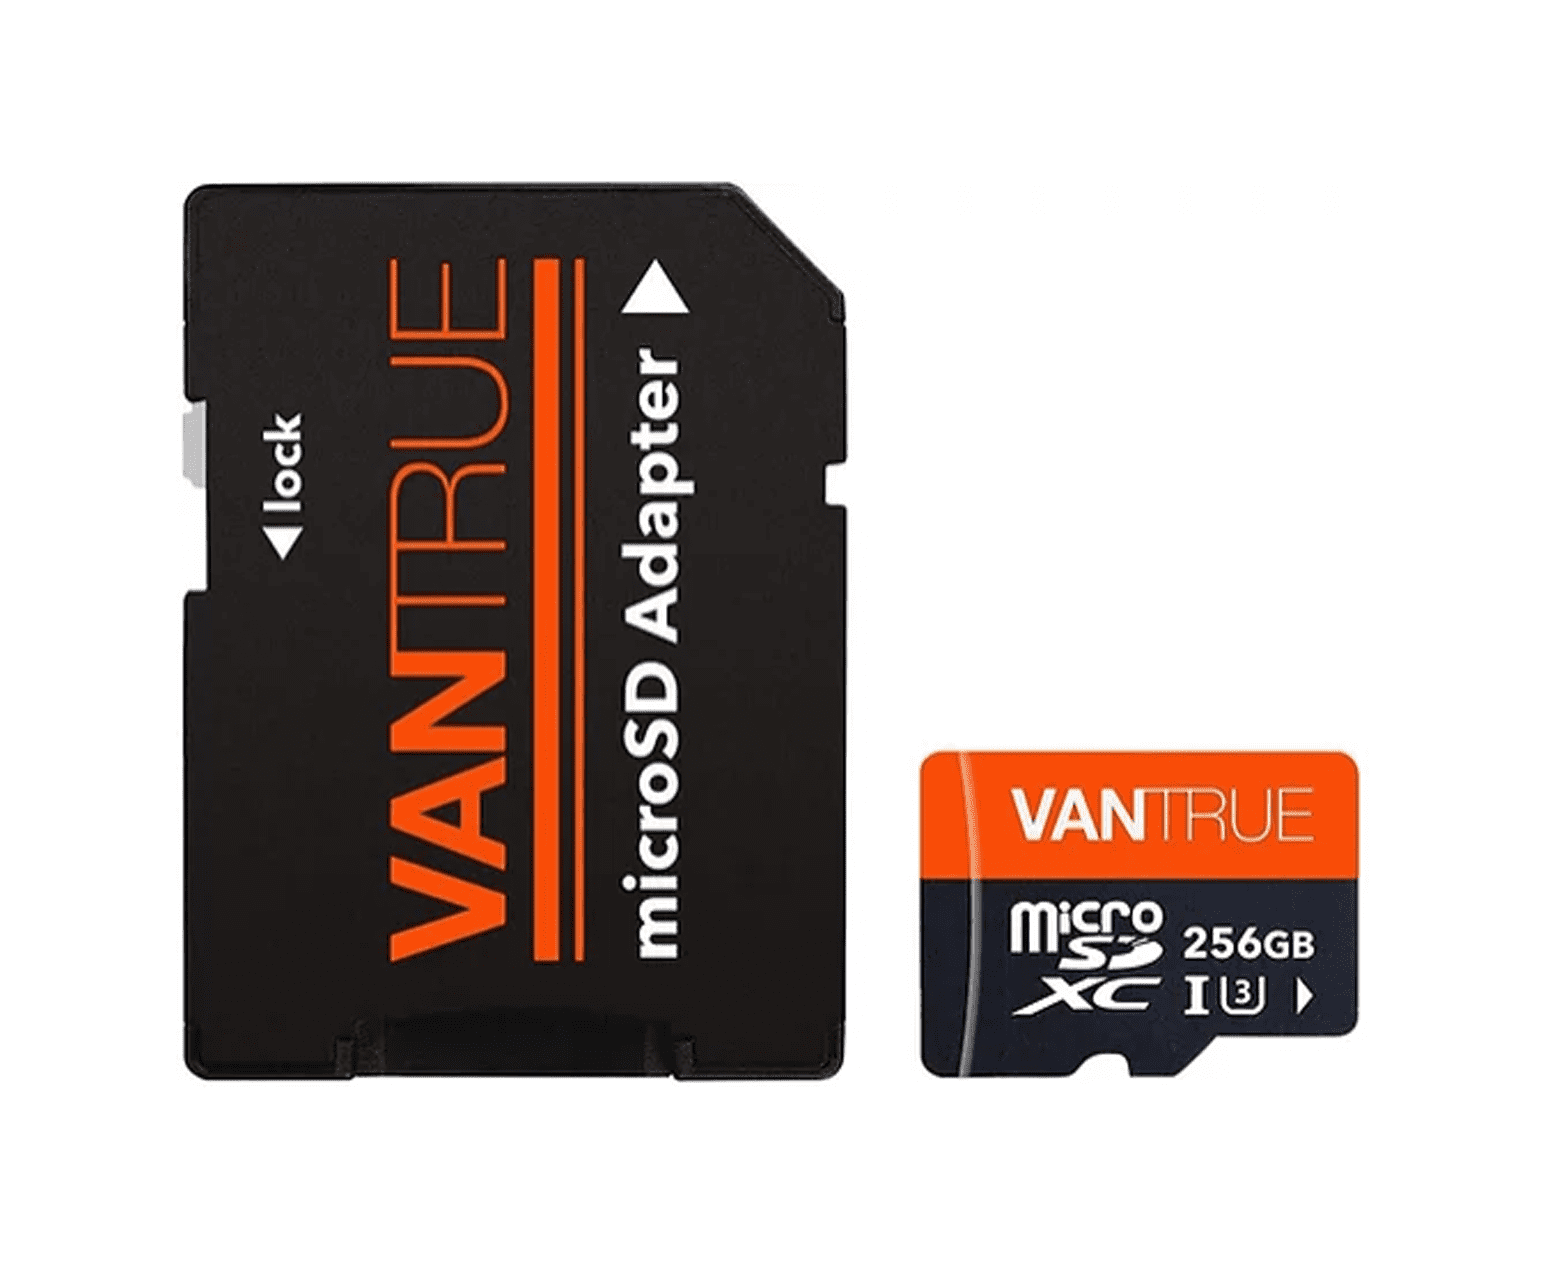 Vantrue 256GB SD card